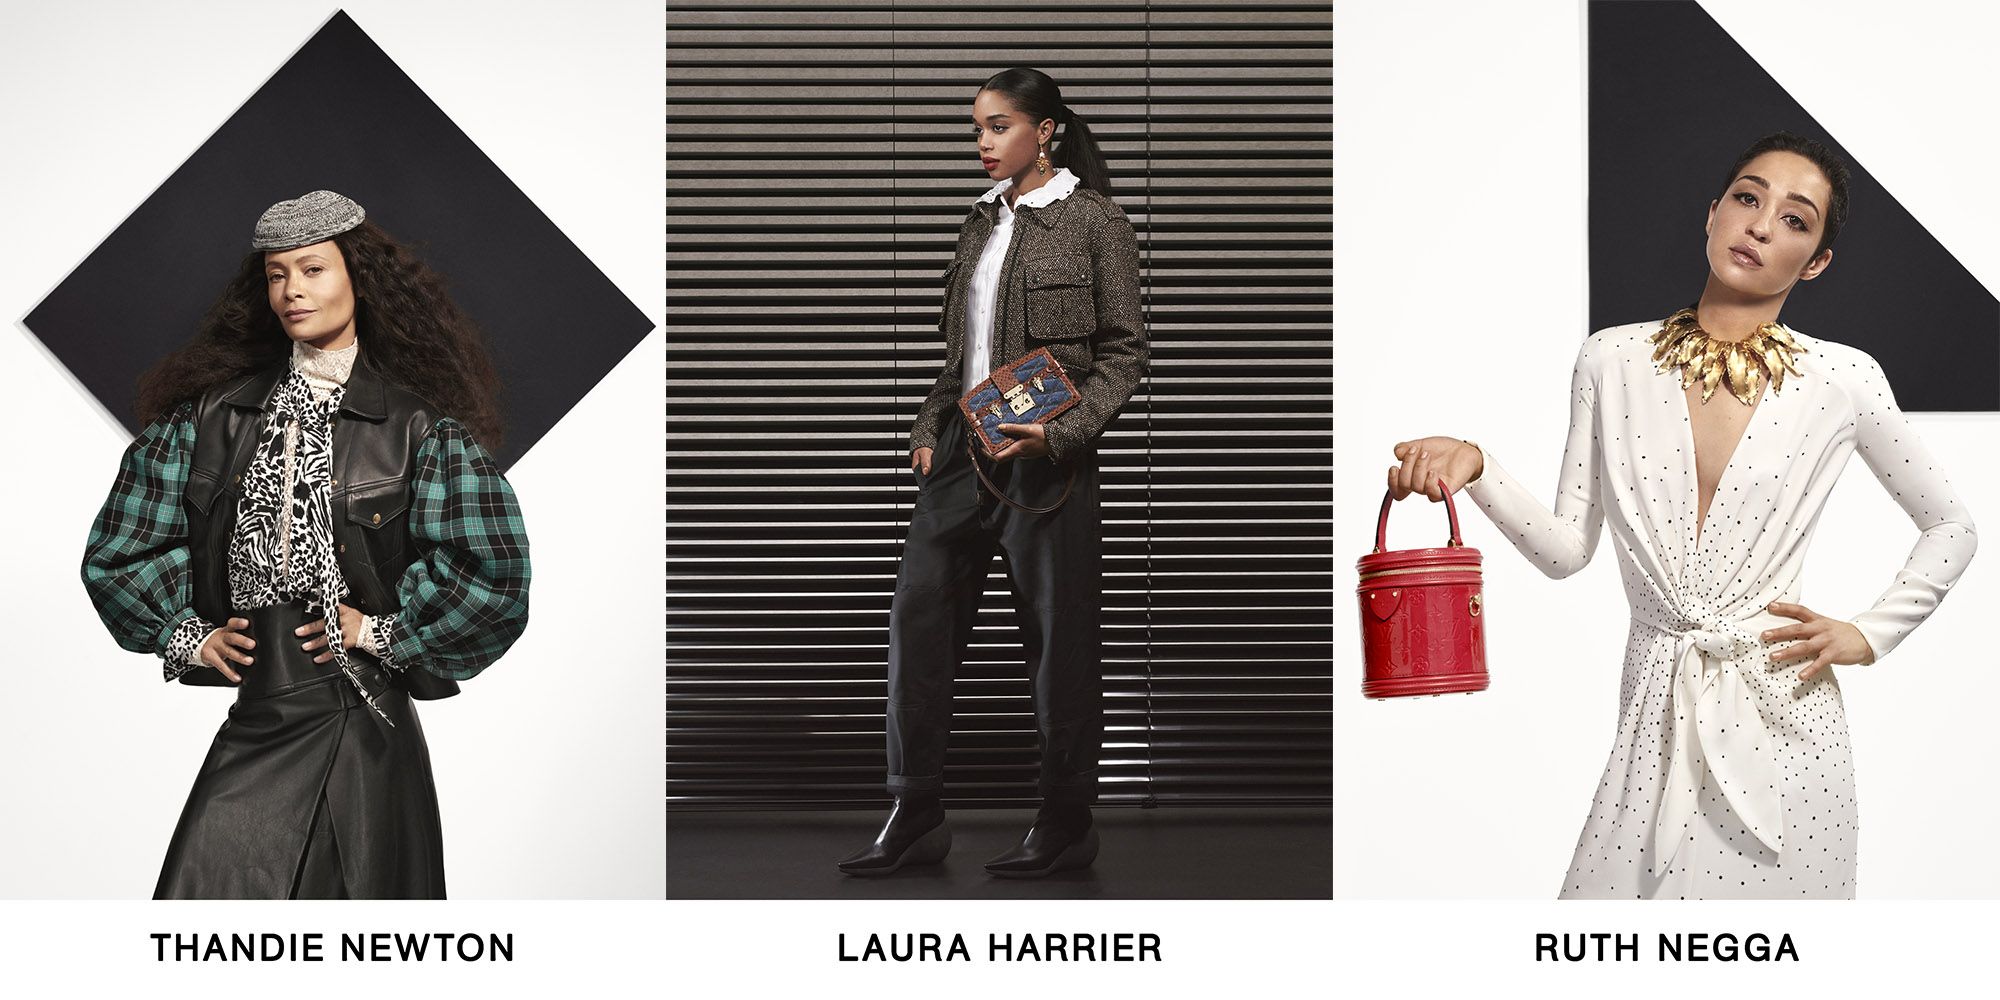 Laura Harrier, Sophie Ruth Negga, More Celebrities Star in Vuitton's Pre-Fall 2019